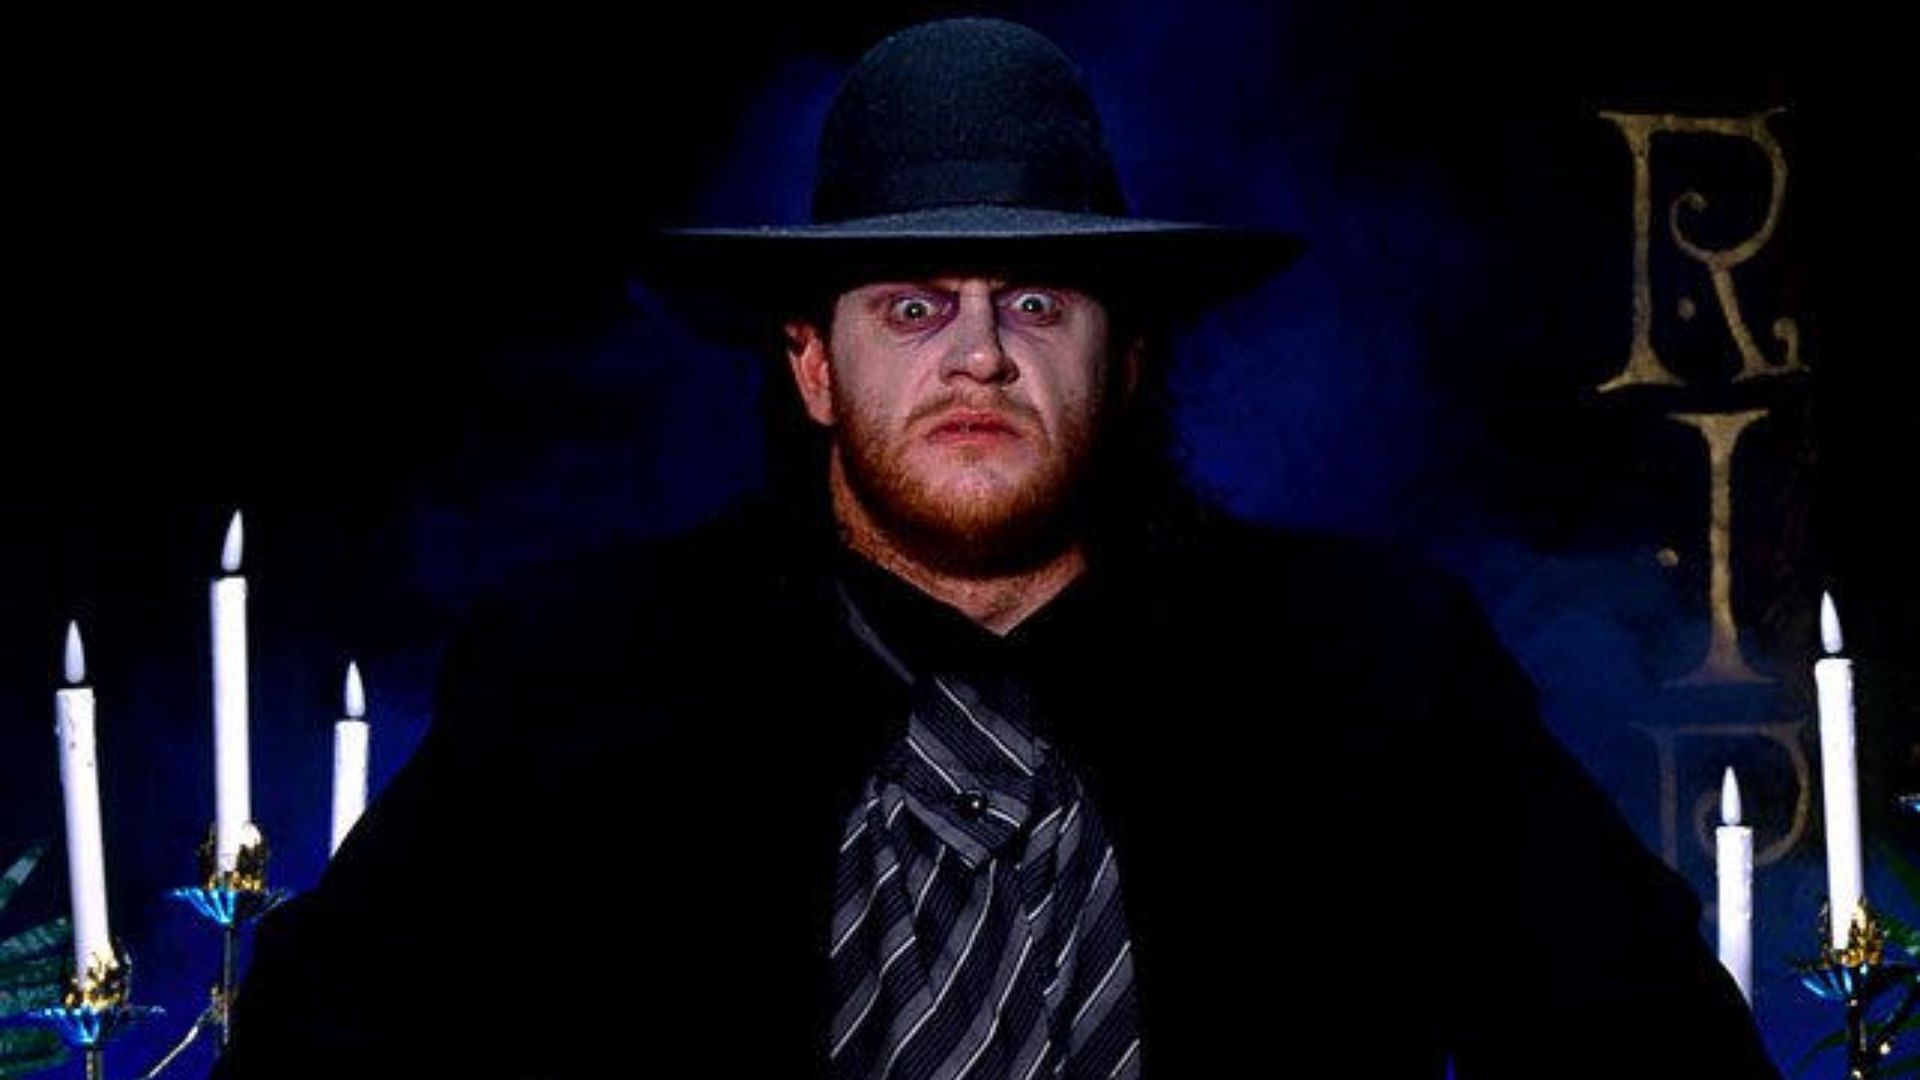 The Undertaker, real name Mark Calaway